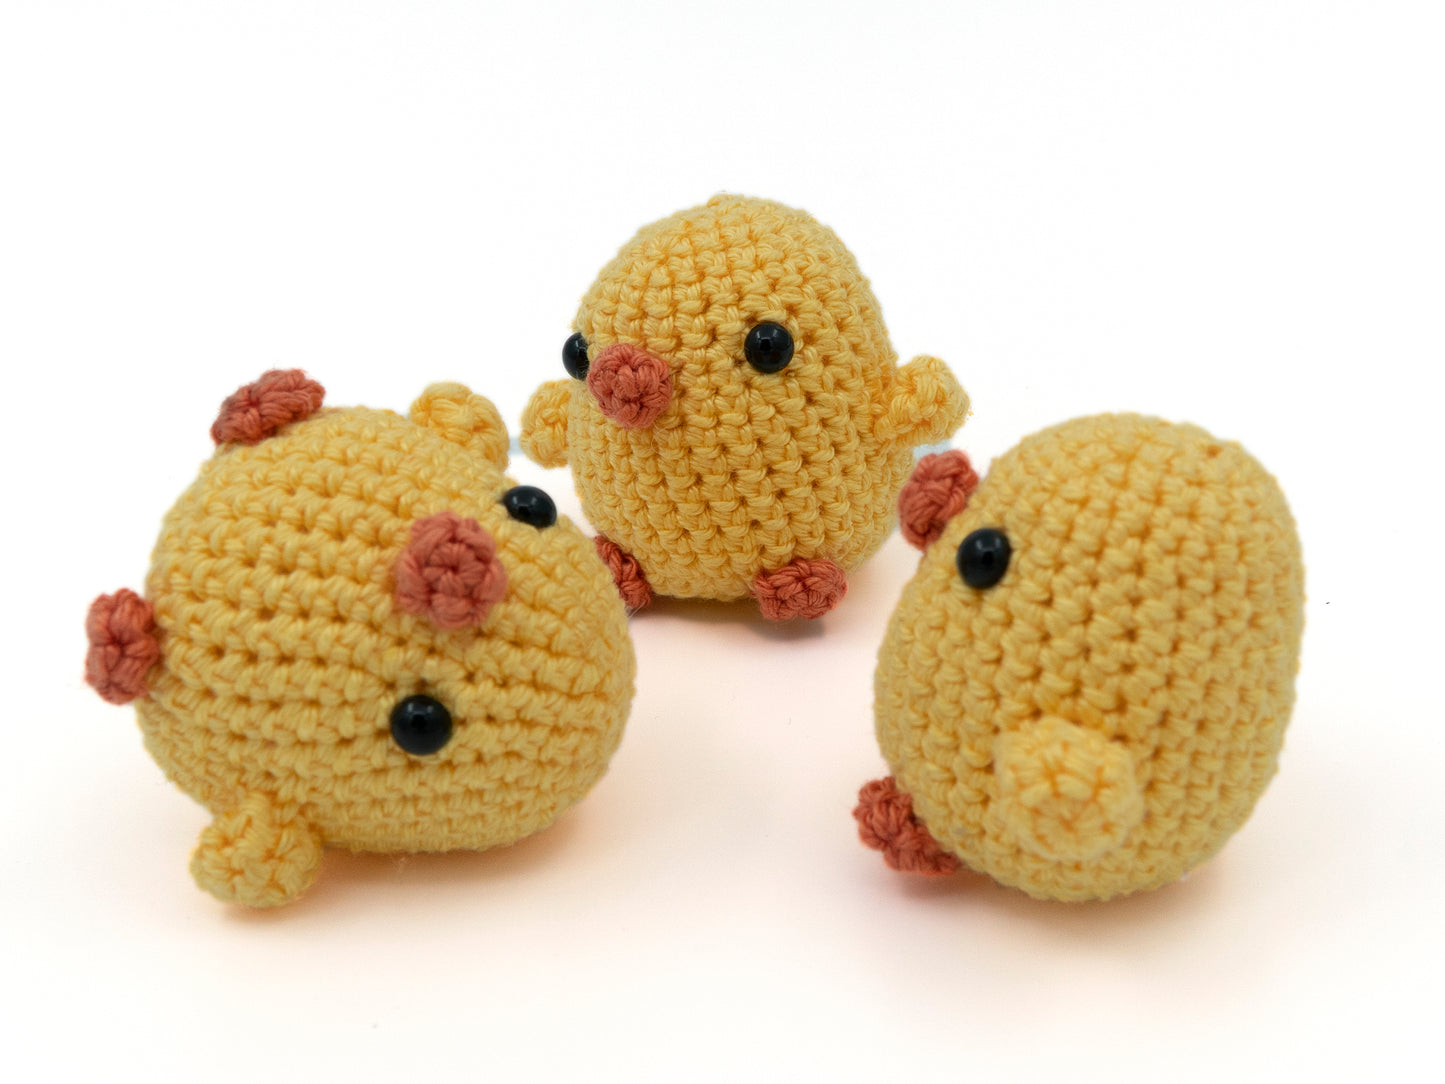 Crochet Pattern: Hen, Chick, and Egg